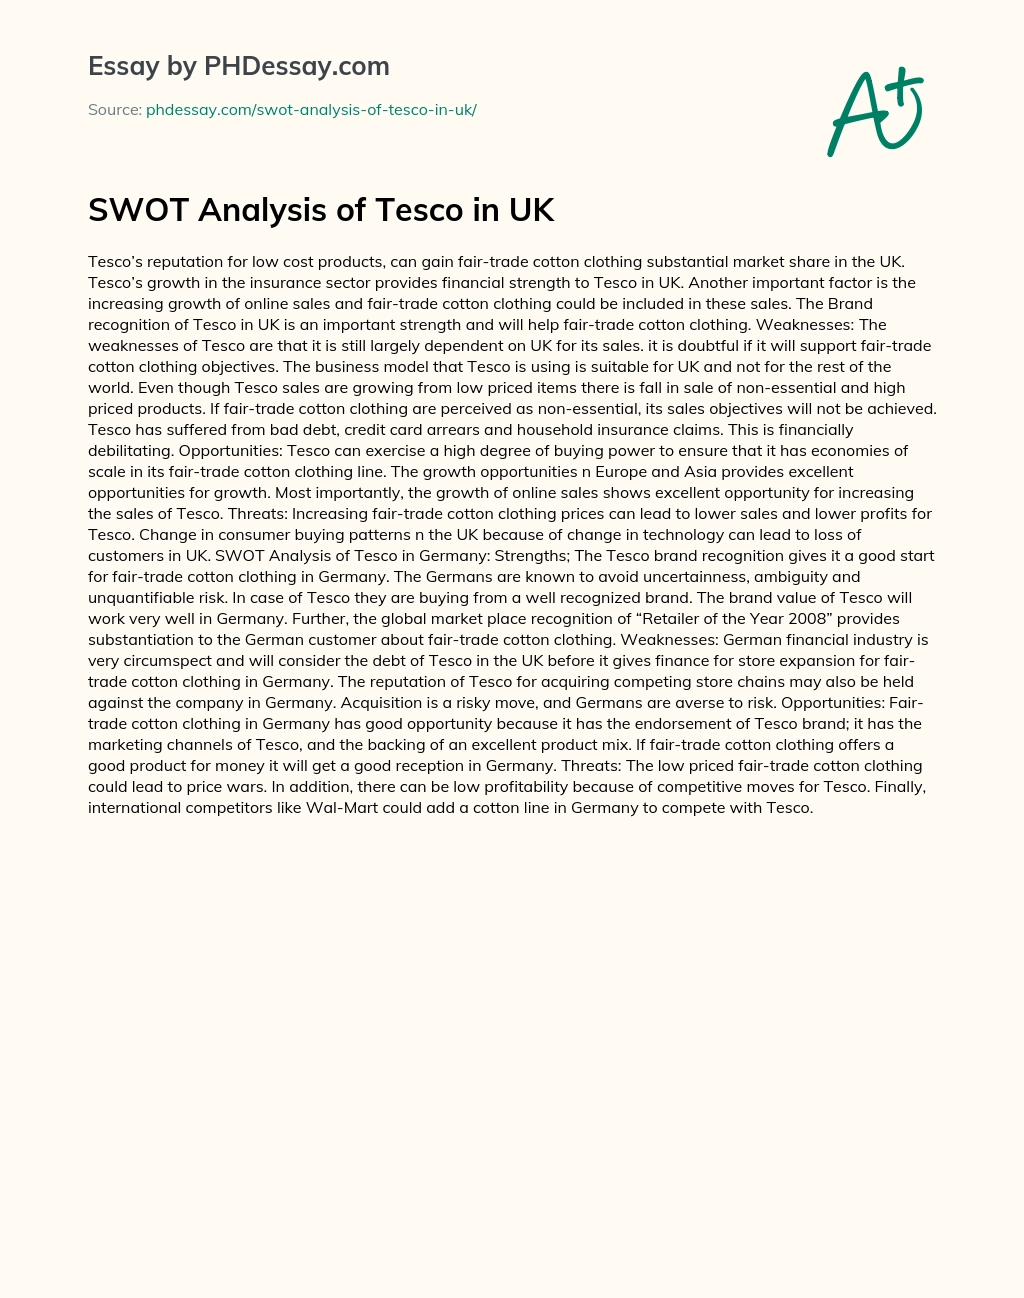 SWOT Analysis of Tesco in UK essay